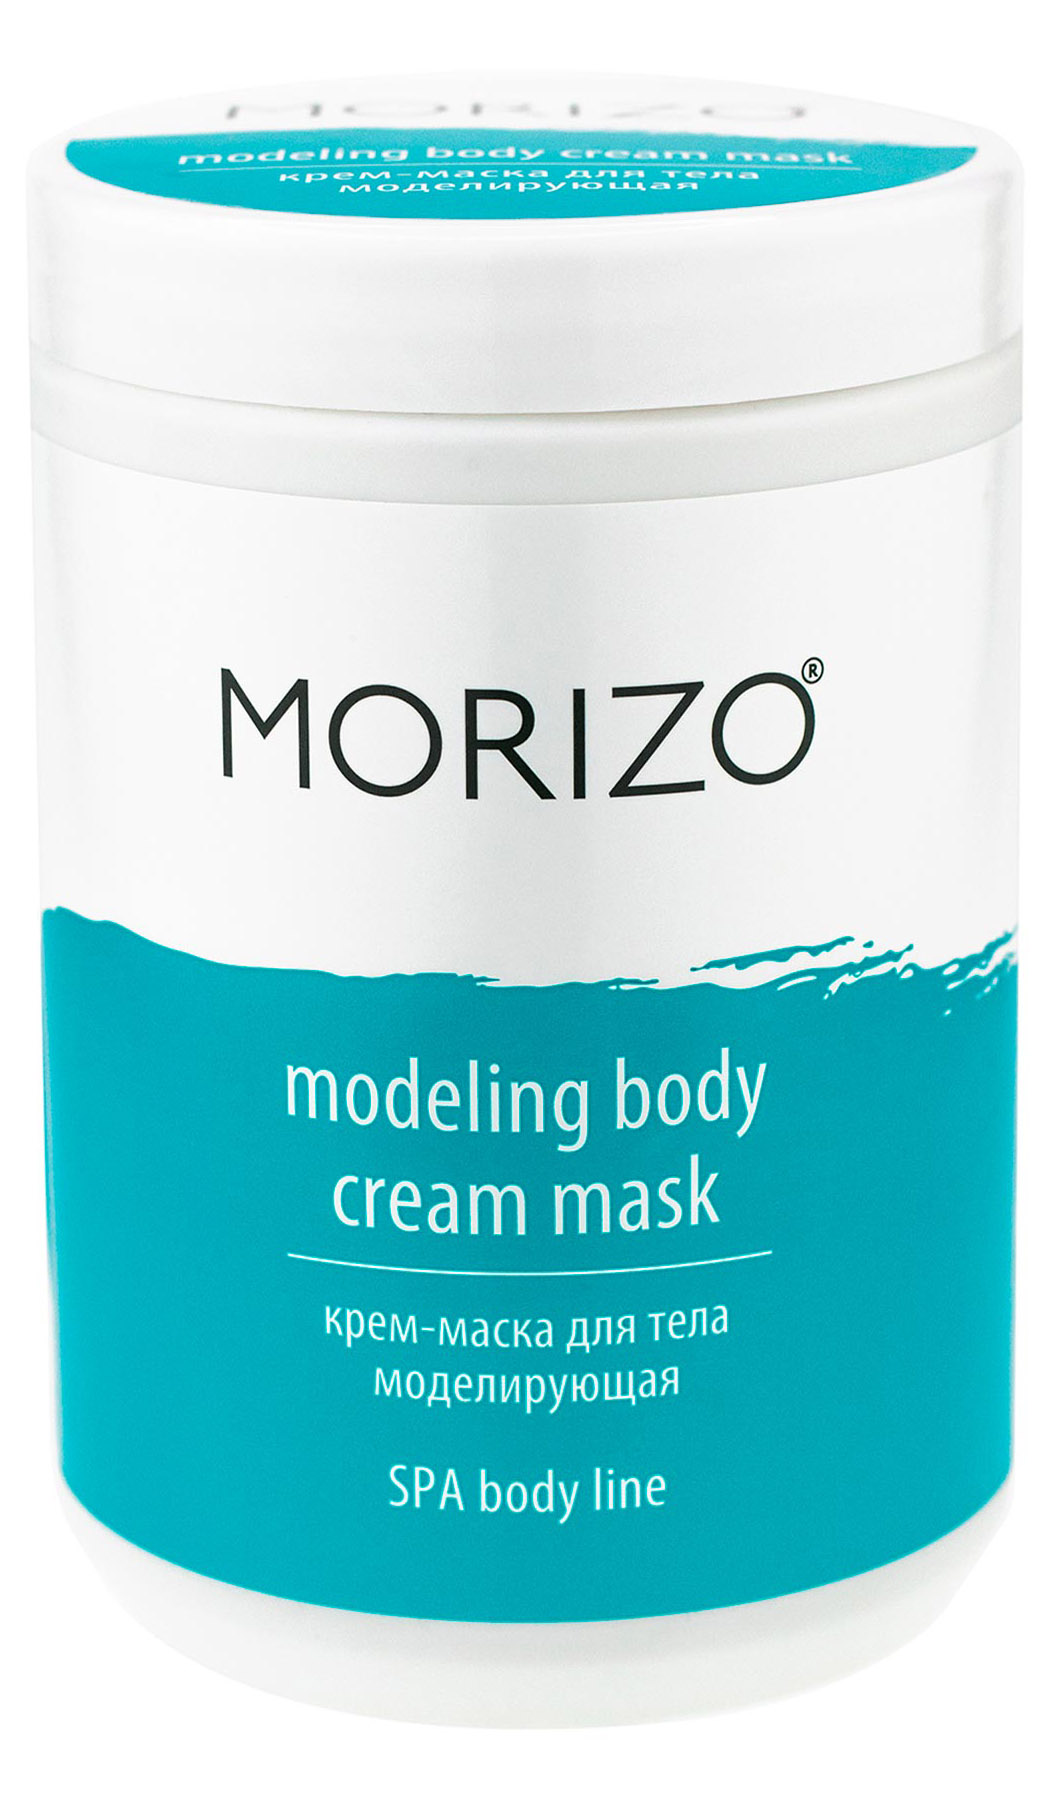 Morizo Крем-маска для тела моделирующая, 1000 мл (Morizo, Ух